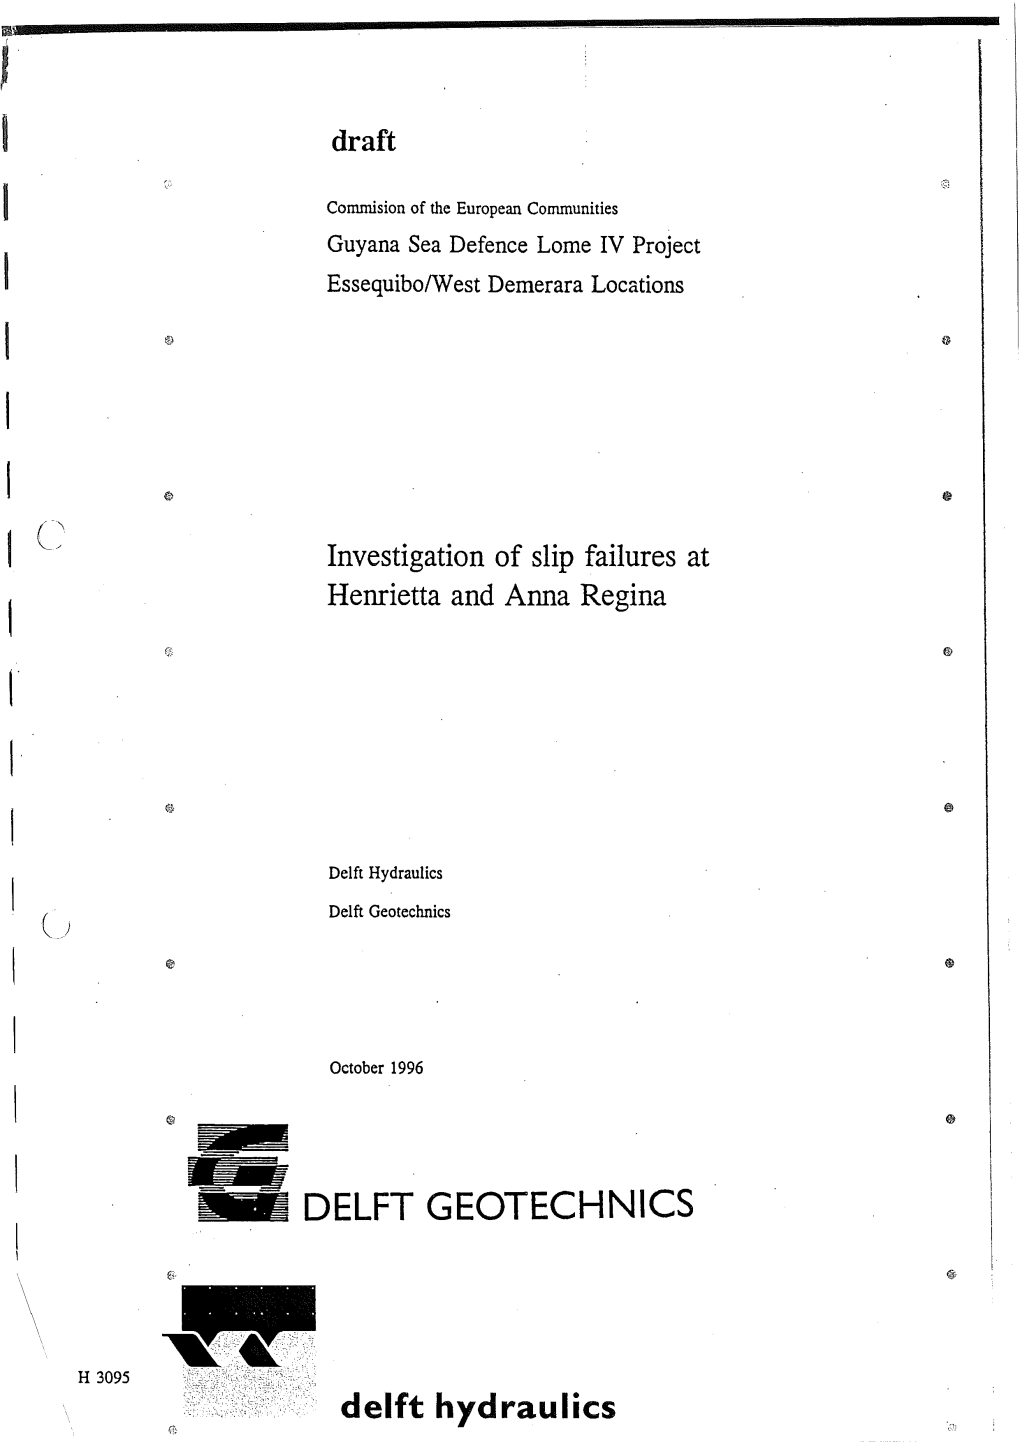 Delft Geotechnics